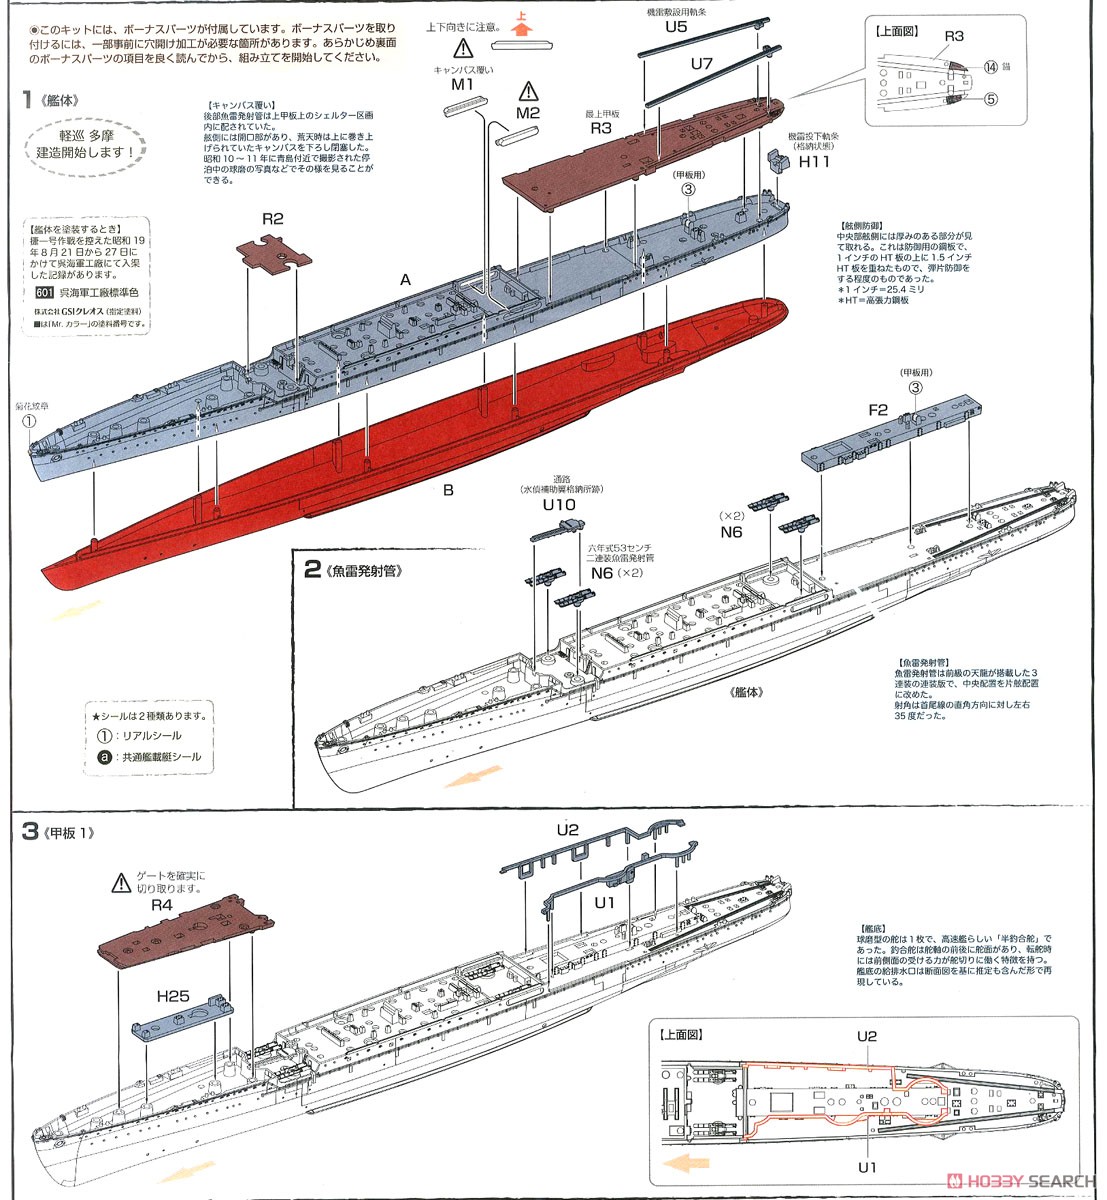 日本海軍軽巡洋艦 多摩 昭和19年/捷一号作戦 (プラモデル) 設計図1